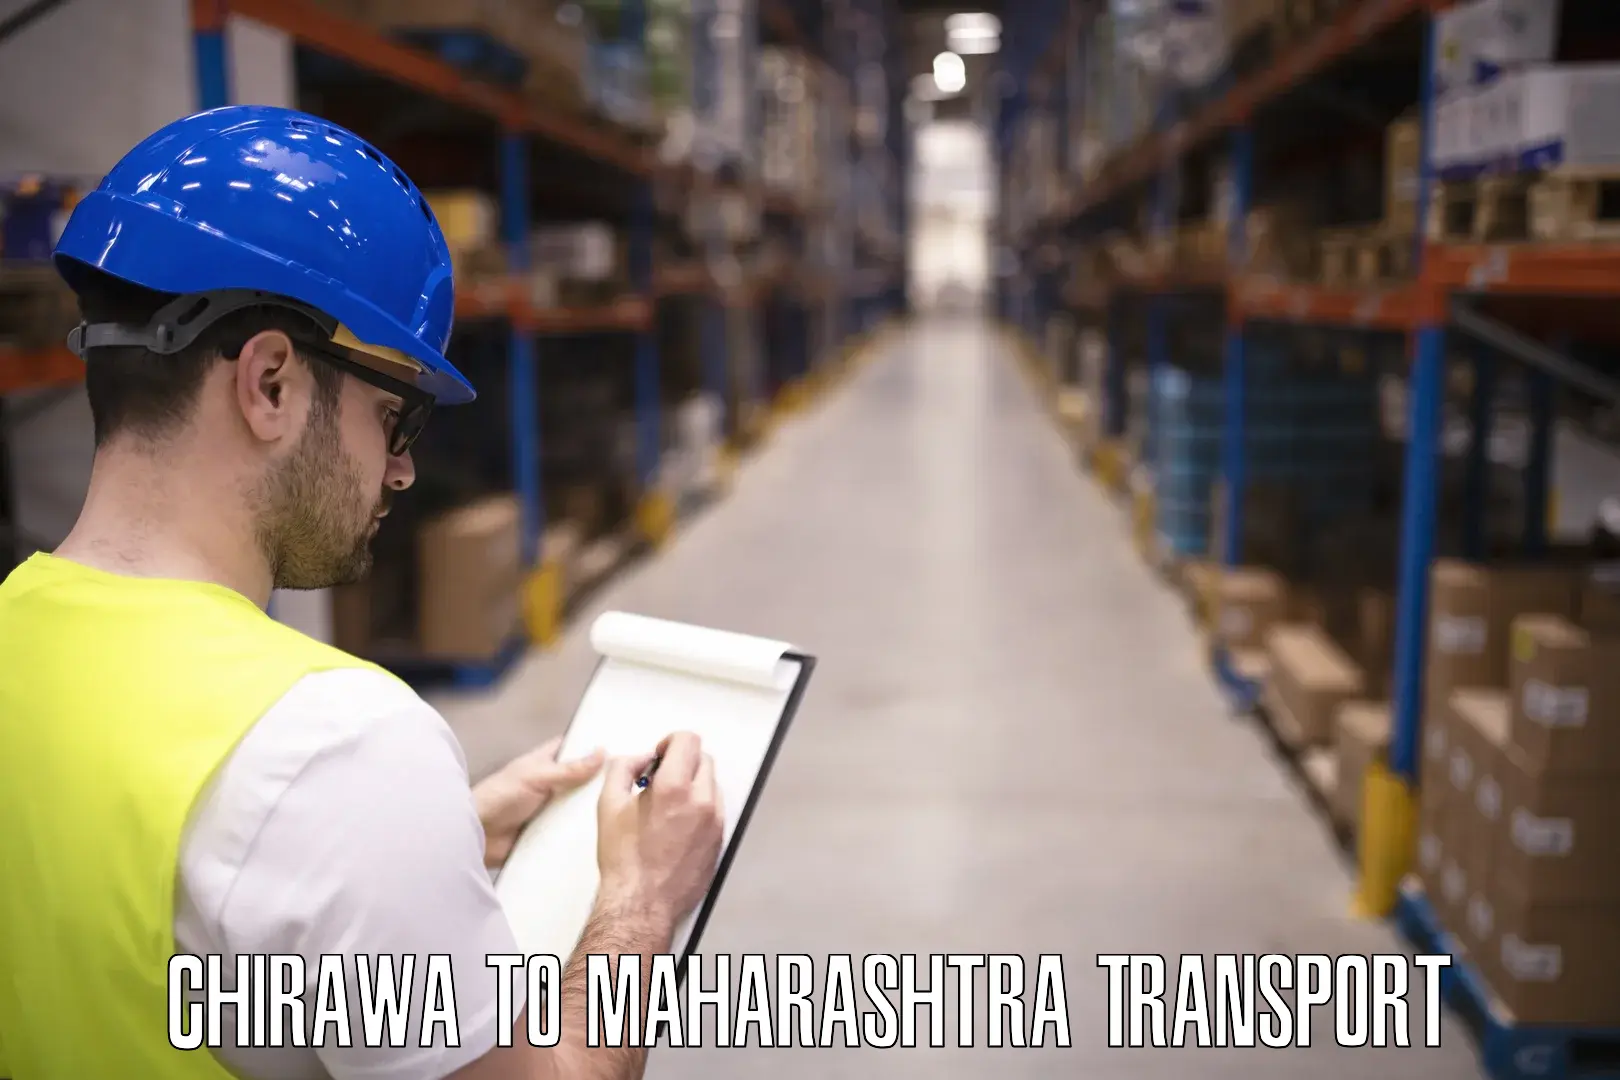 Transportation services in Chirawa to Maharashtra